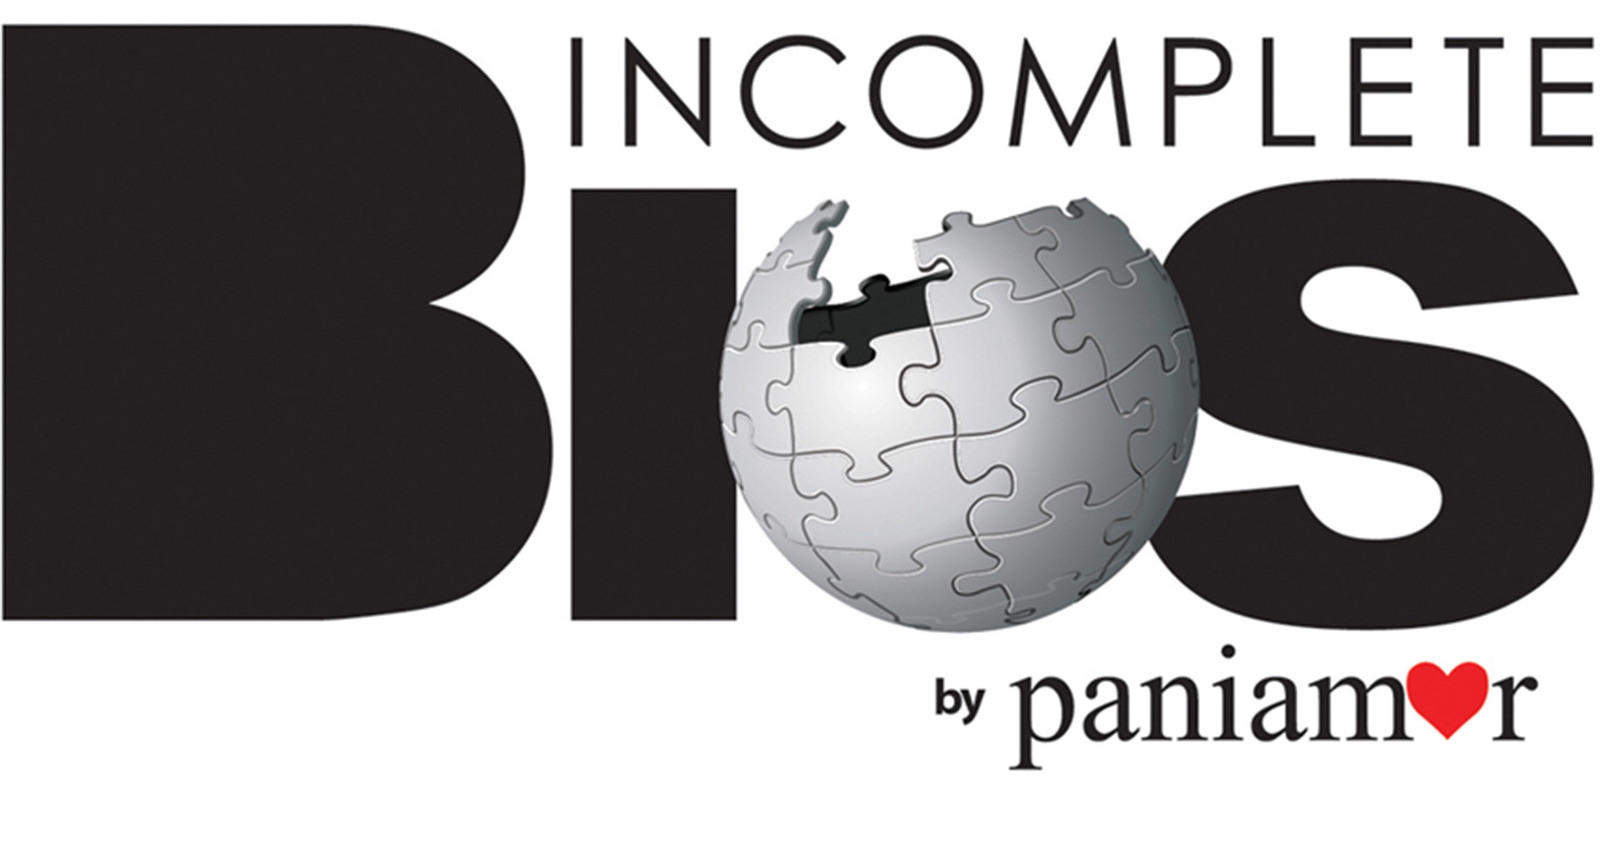 Incomplete Bios